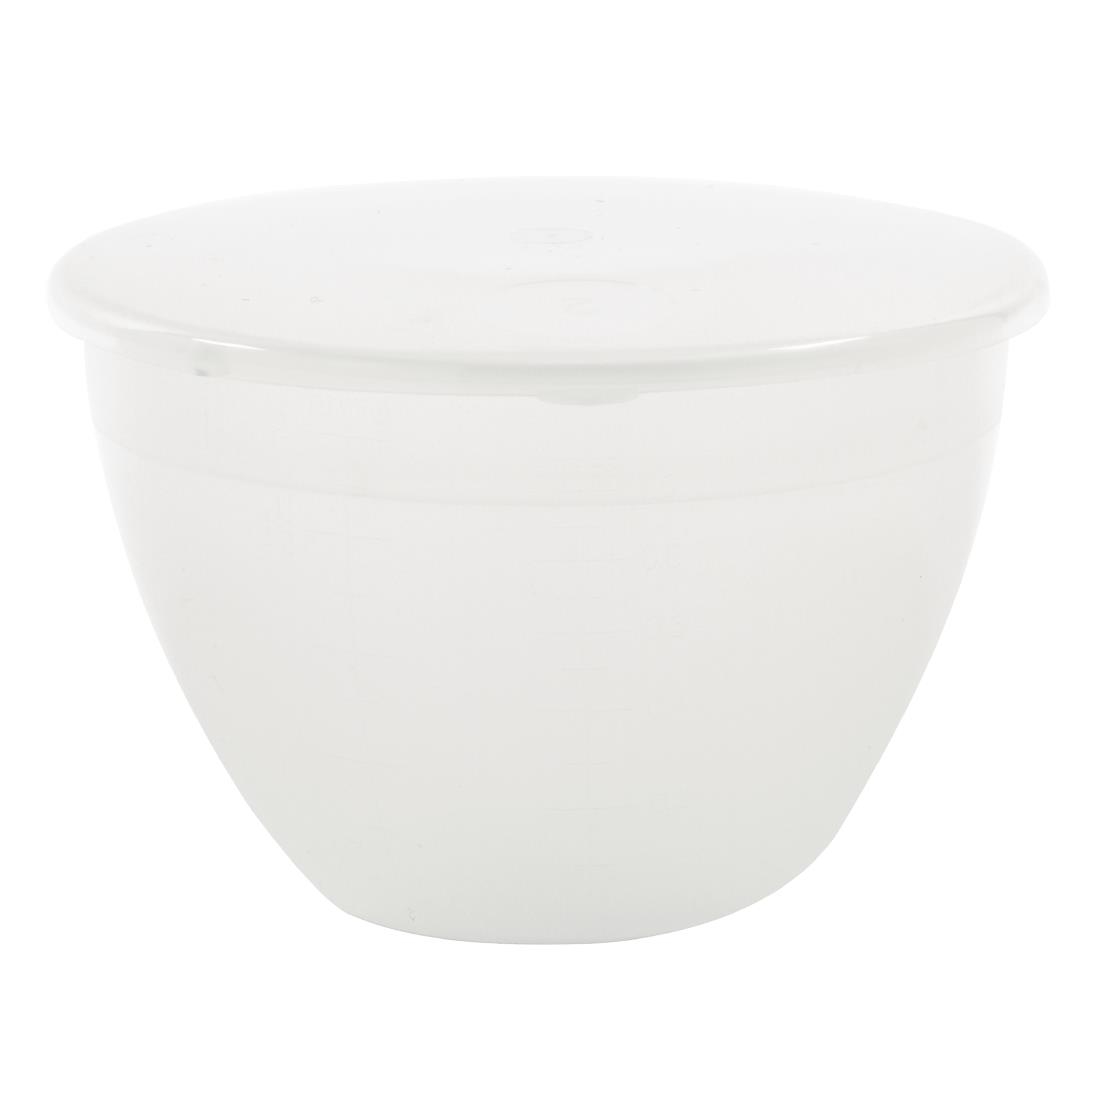 Kitchen Craft Polypropylene Pudding Basins 290ml (Pack of 12)